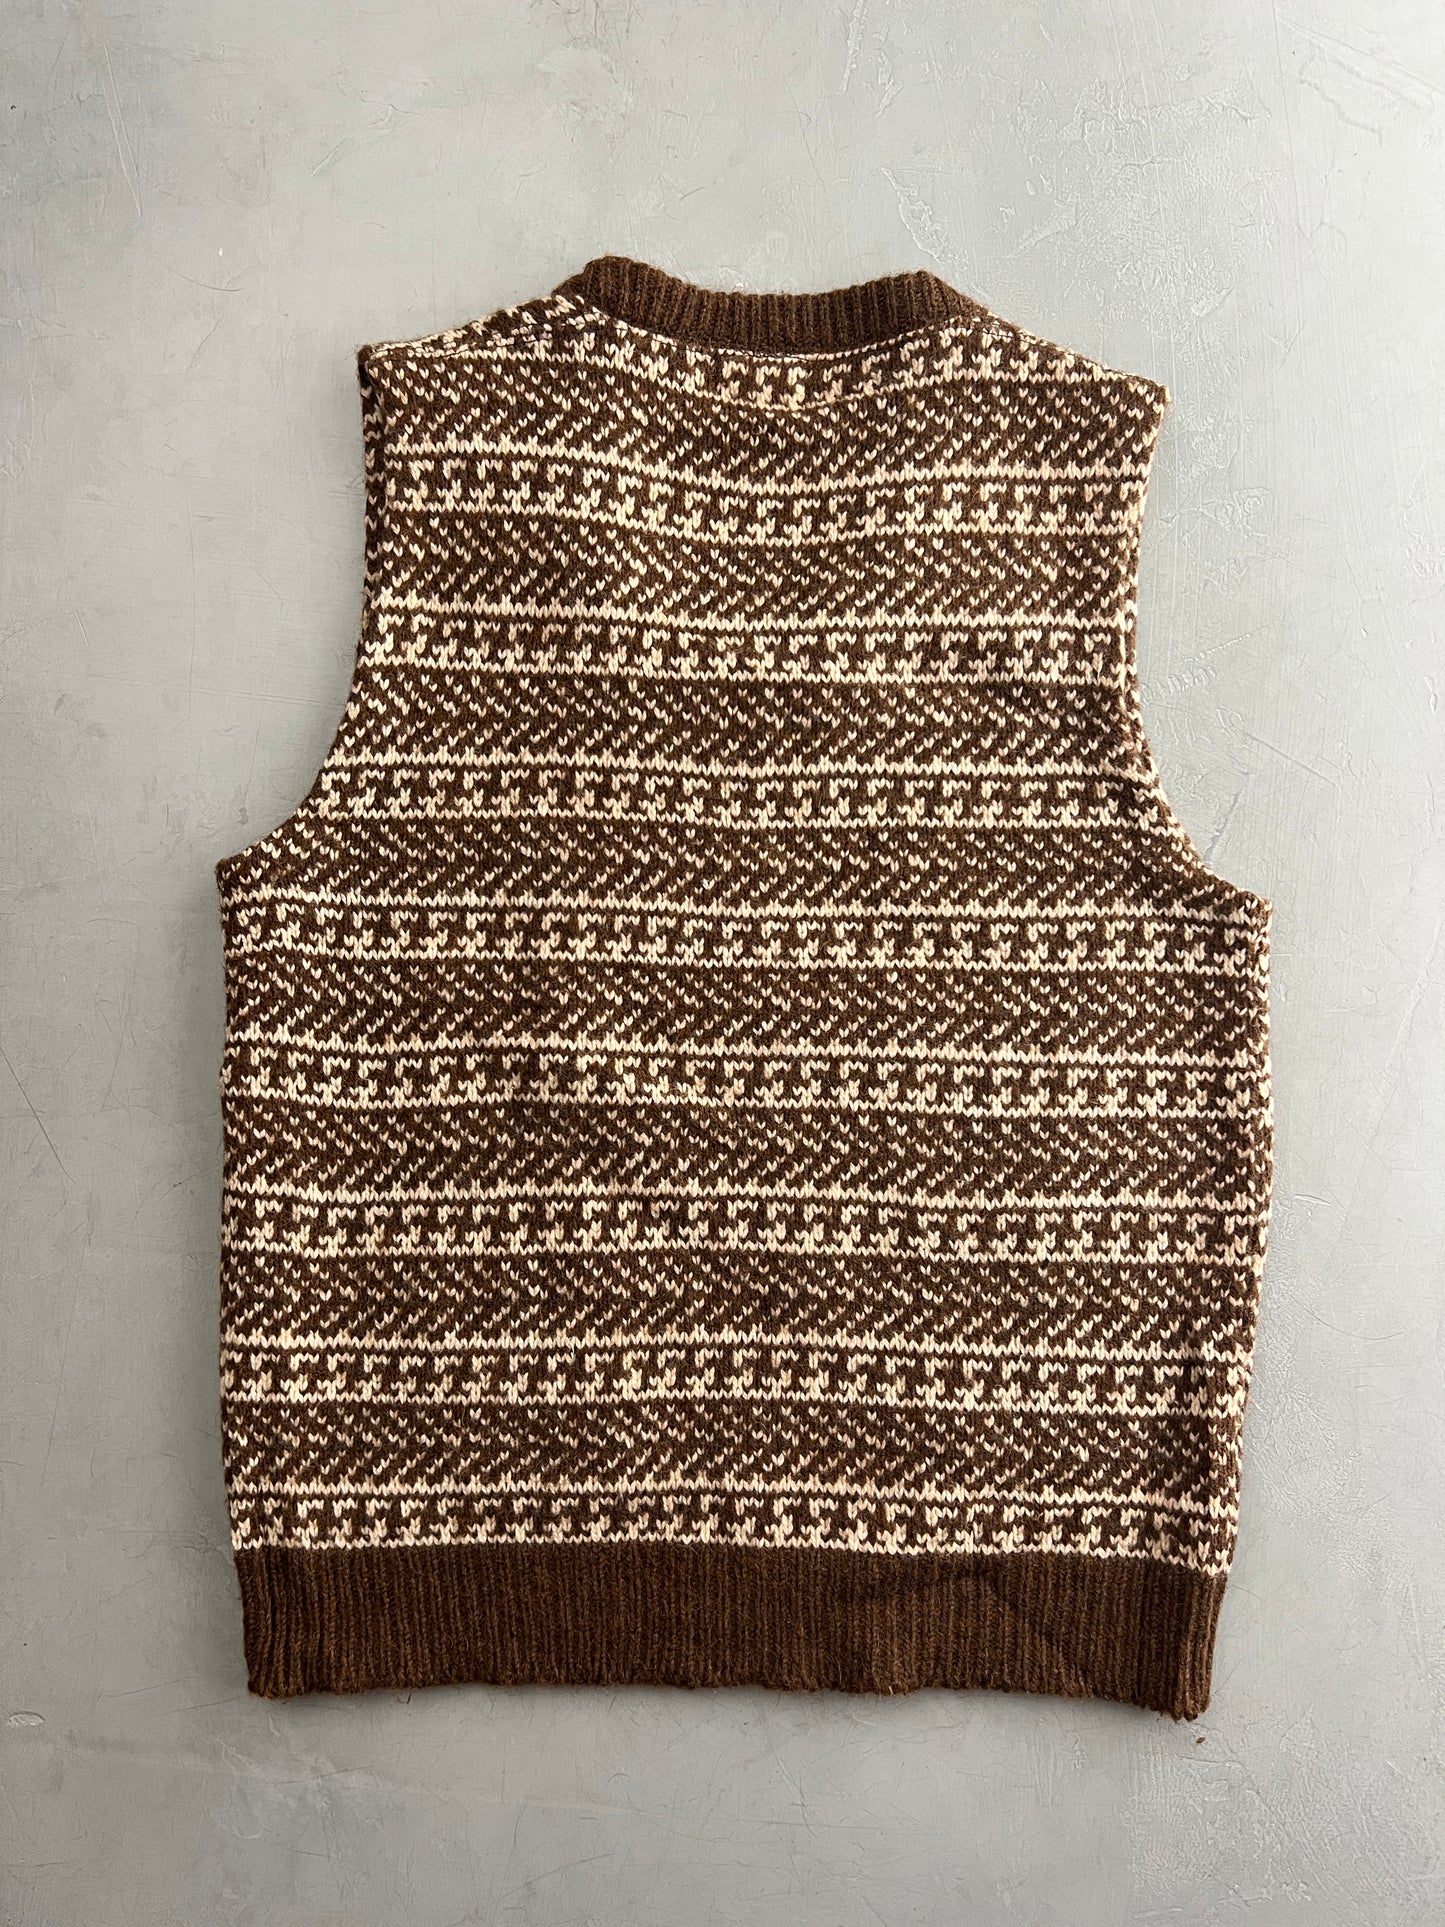 Vaughn Sweater Vest [M]